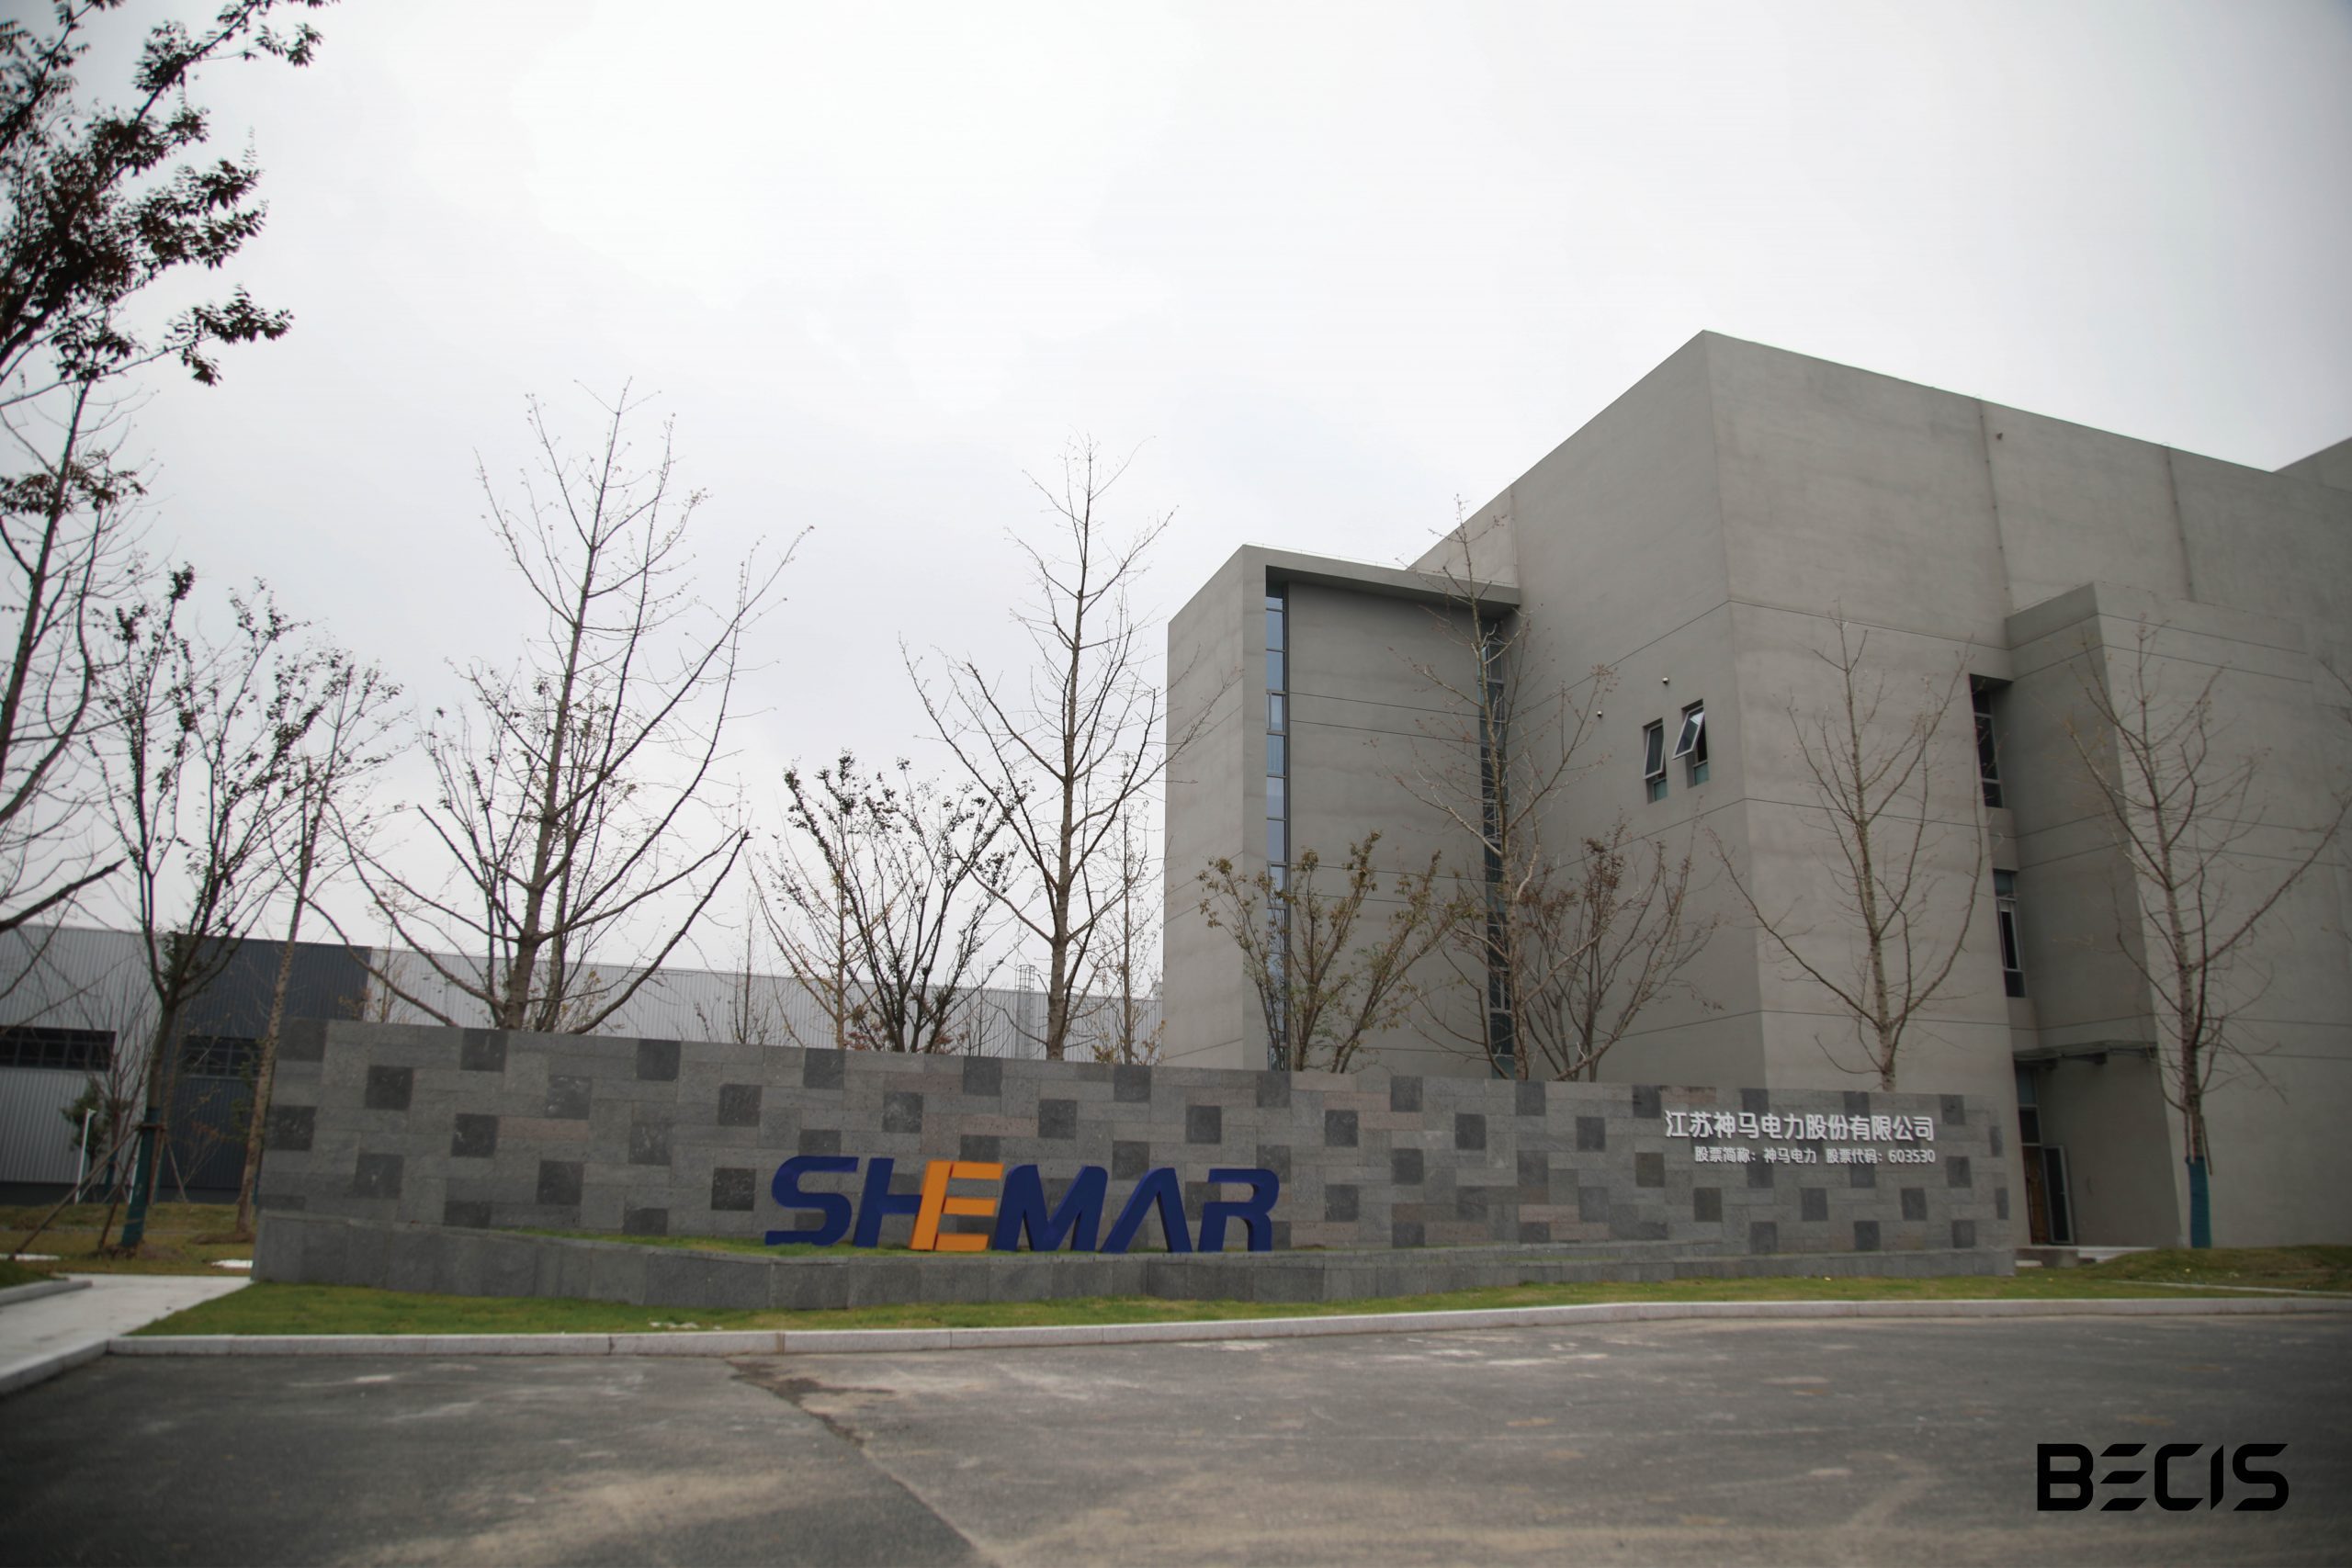 Shemar Electric China